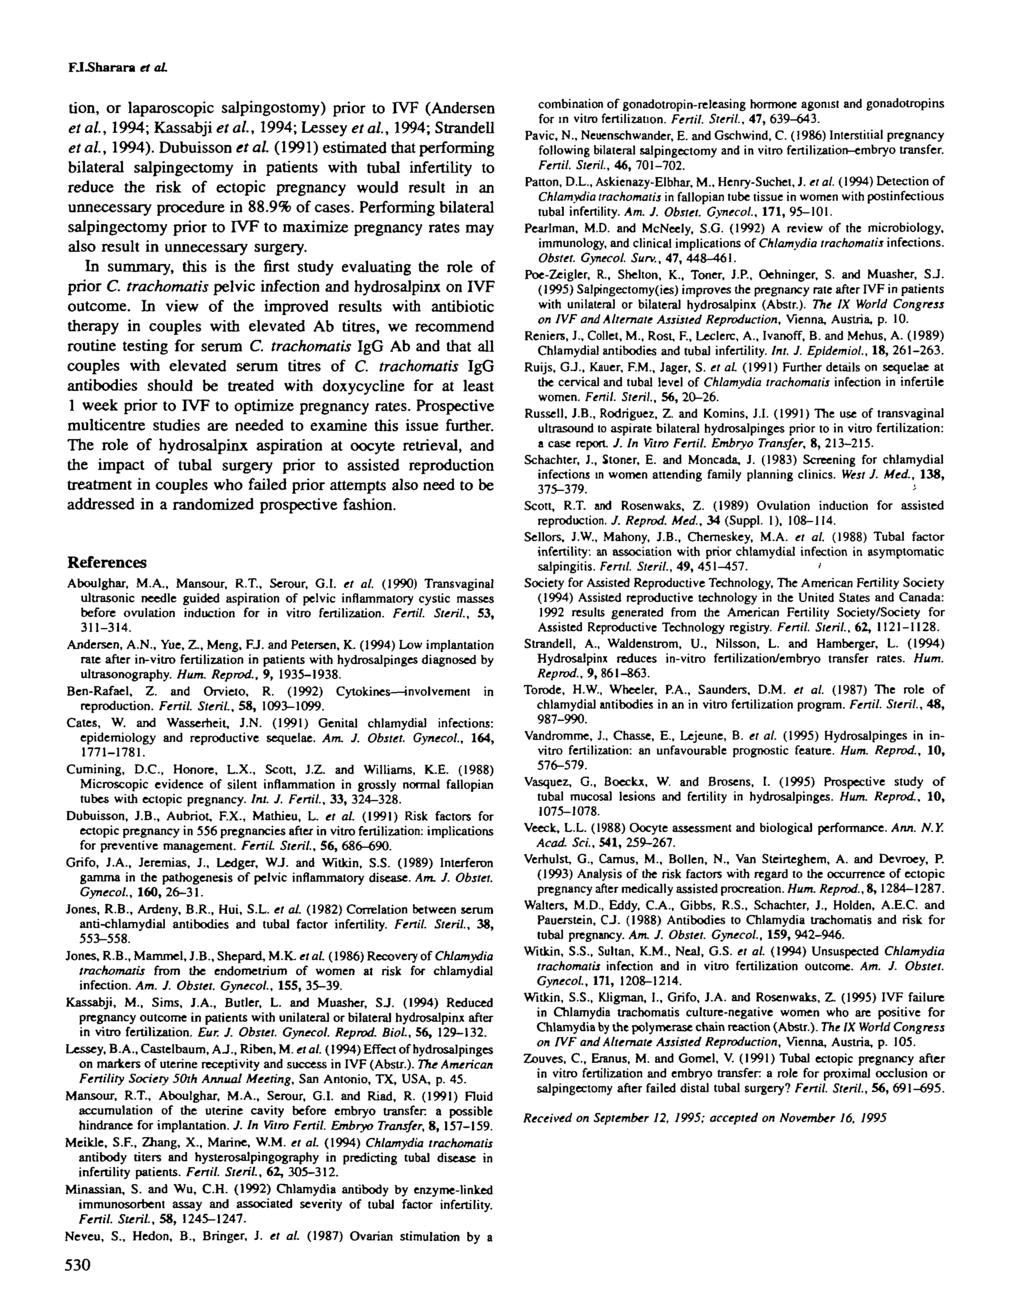 FJ.Sharara et al tion, or laparoscopic salpingostomy) prior to IVF (Andersen et al, 1994; Kassabji et al., 1994; Lessey et al., 1994; Strandell etal, 1994).